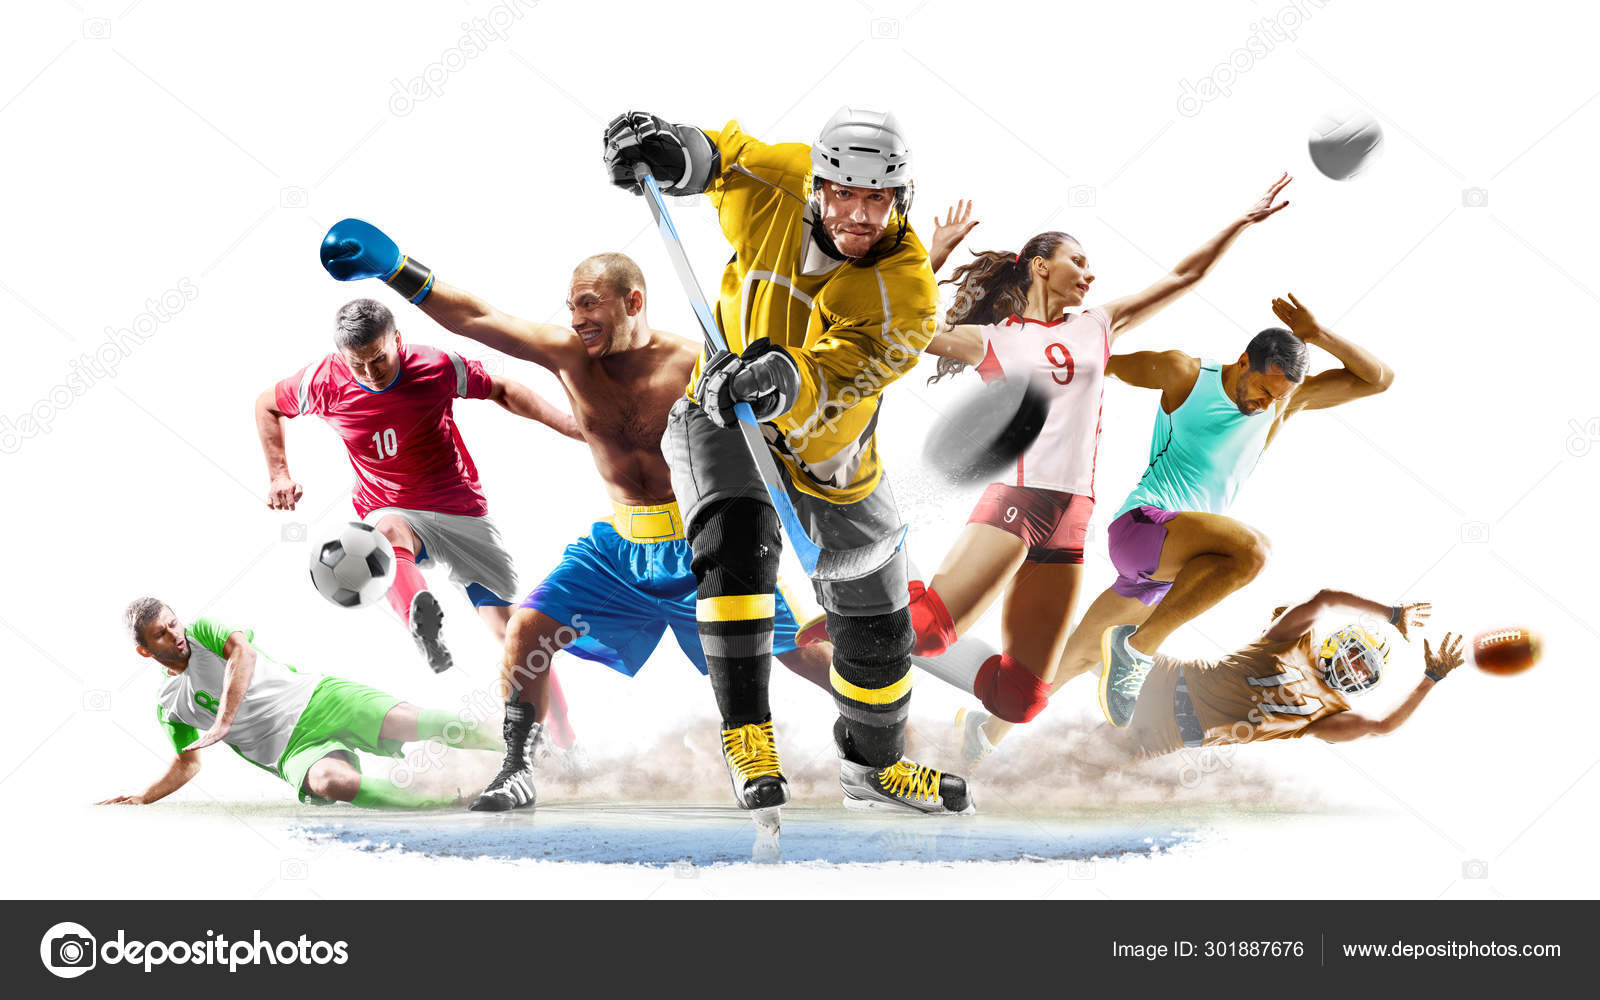 https://st4.depositphotos.com/3334457/30188/i/1600/depositphotos_301887676-stock-photo-multi-sport-collage-football-boxing.jpg